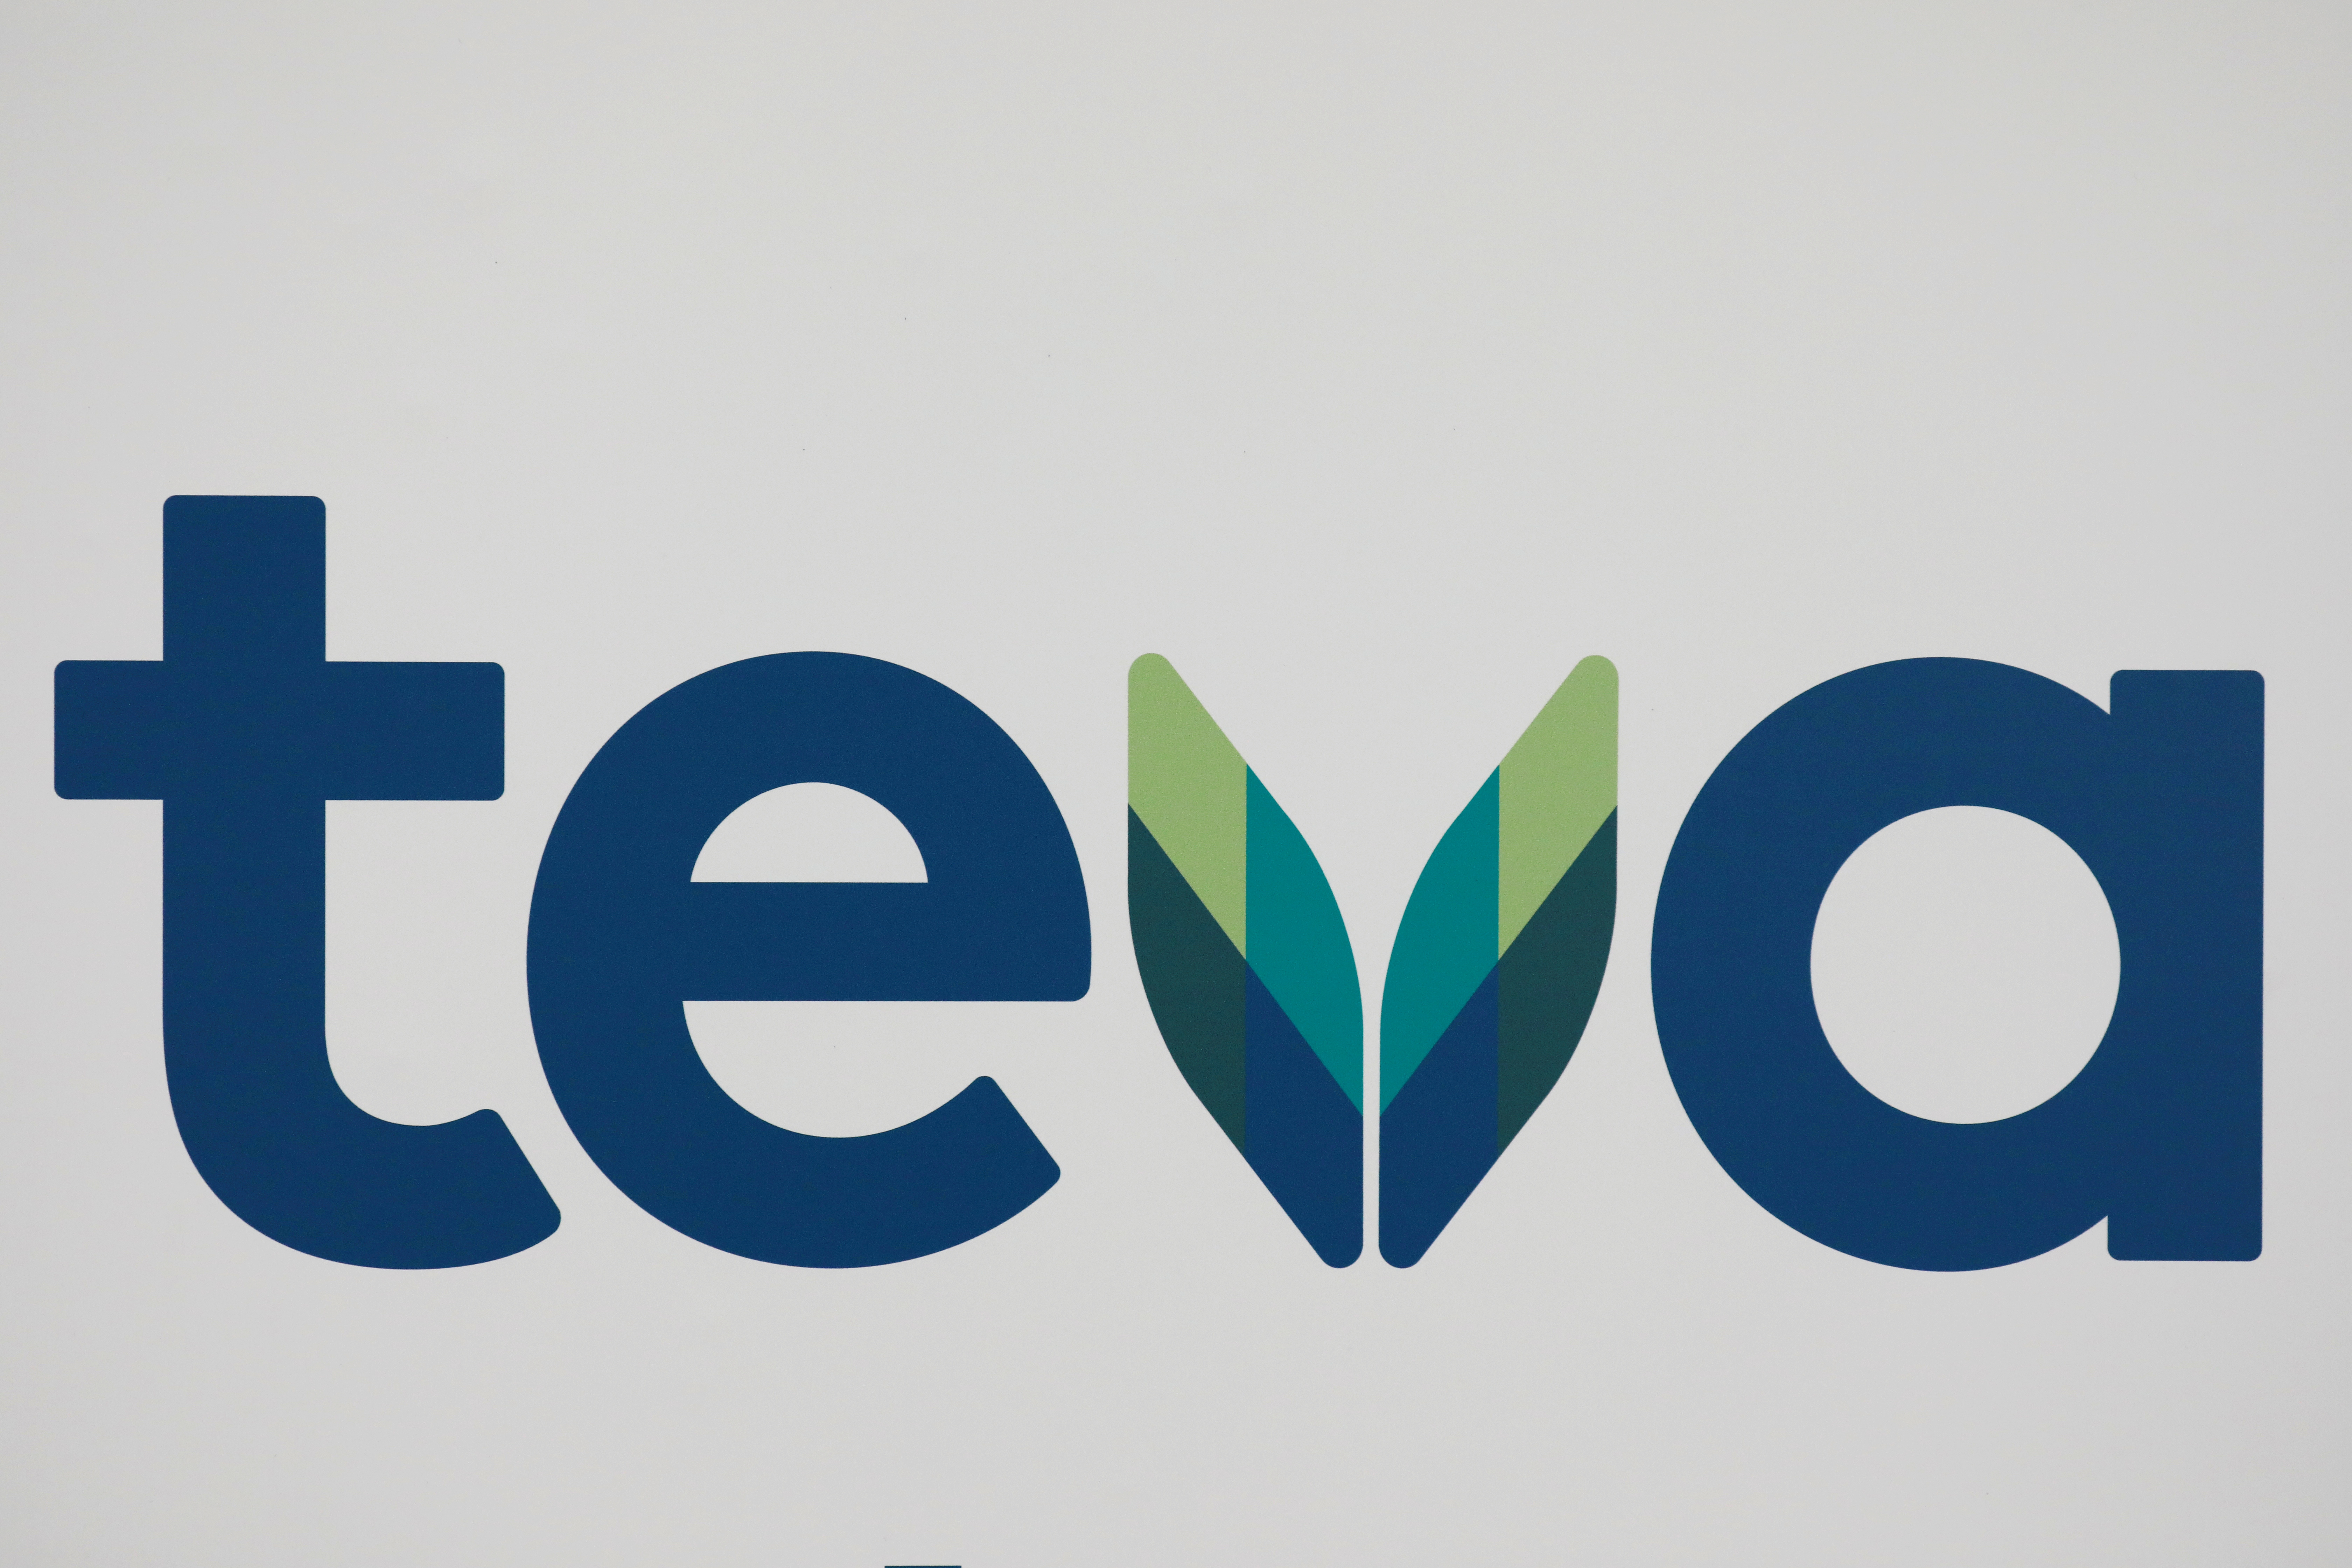 The logo of Teva Pharmaceutical Industries is seen in Tel Aviv, Israel February 19, 2019. REUTERS/Amir Cohen